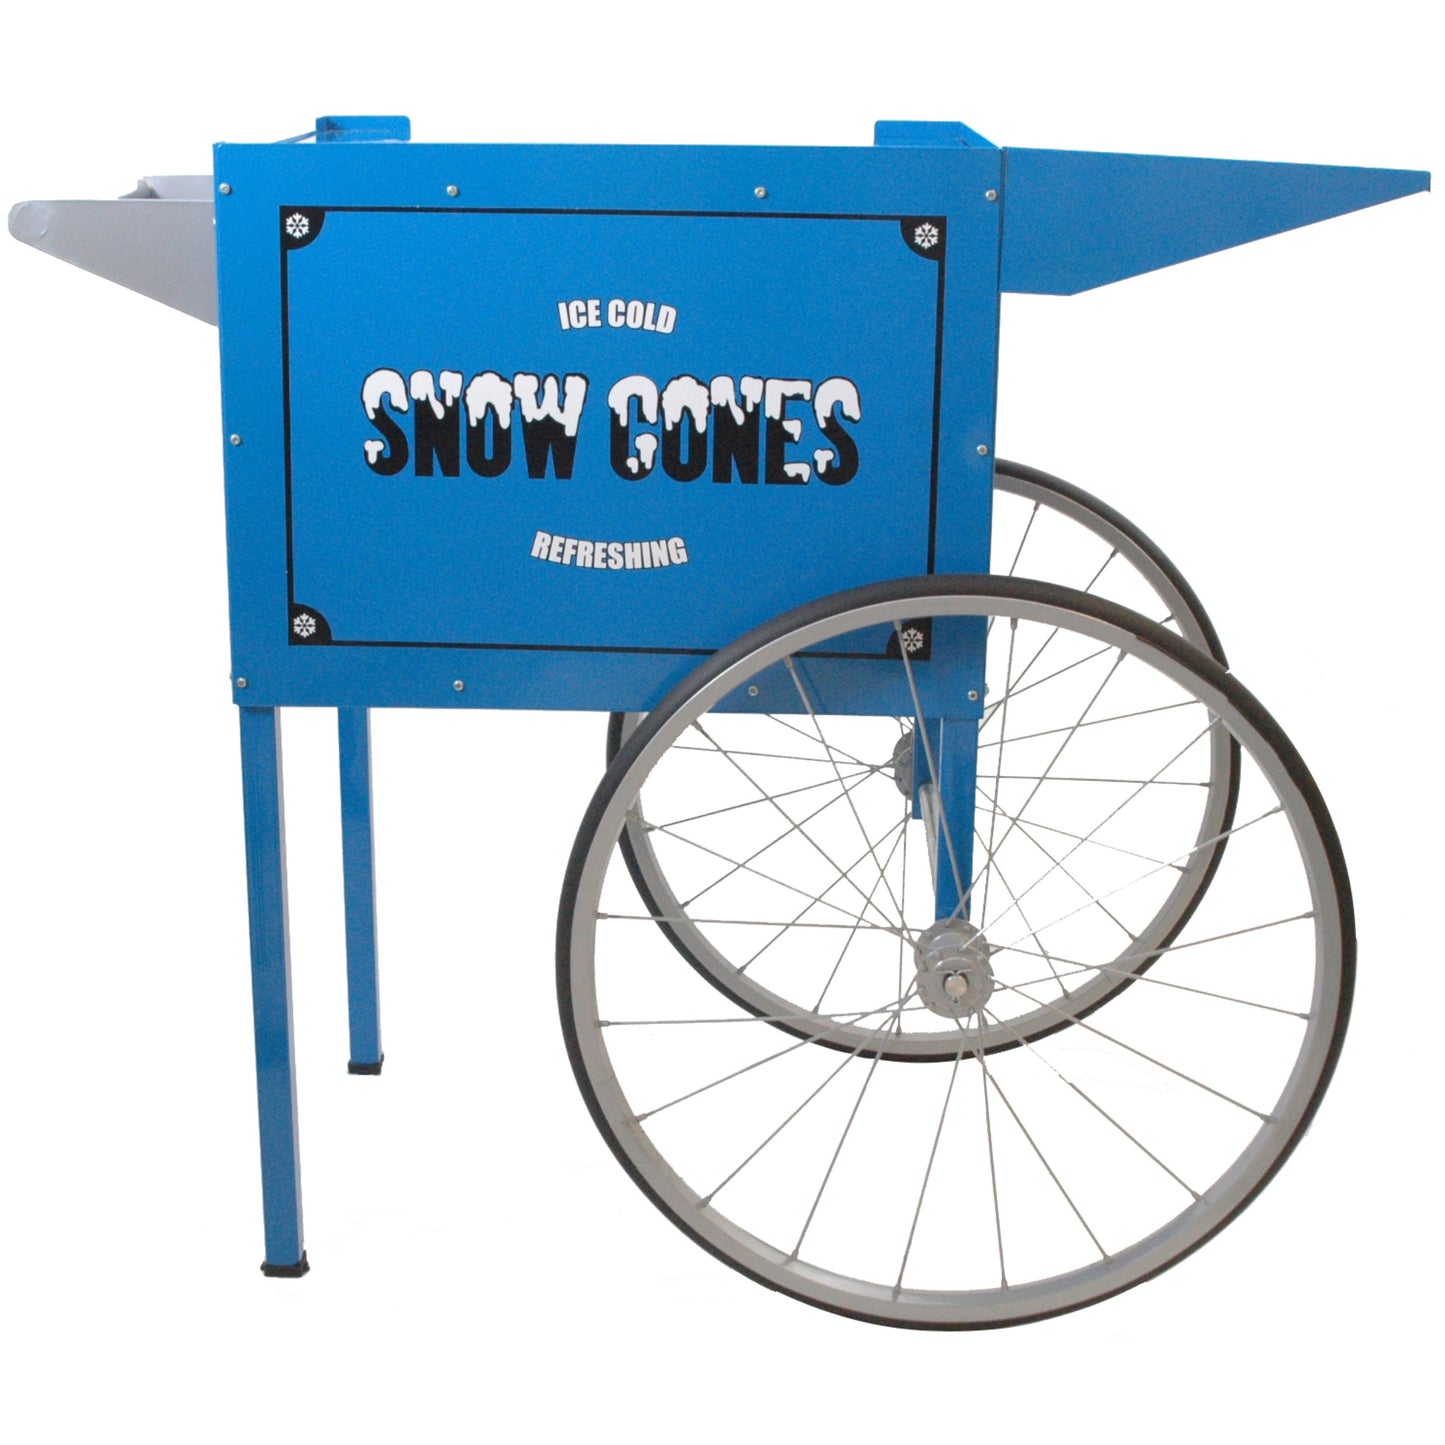 BenchmarkUSA "Snow Bank" Snow Cone Machine Cart